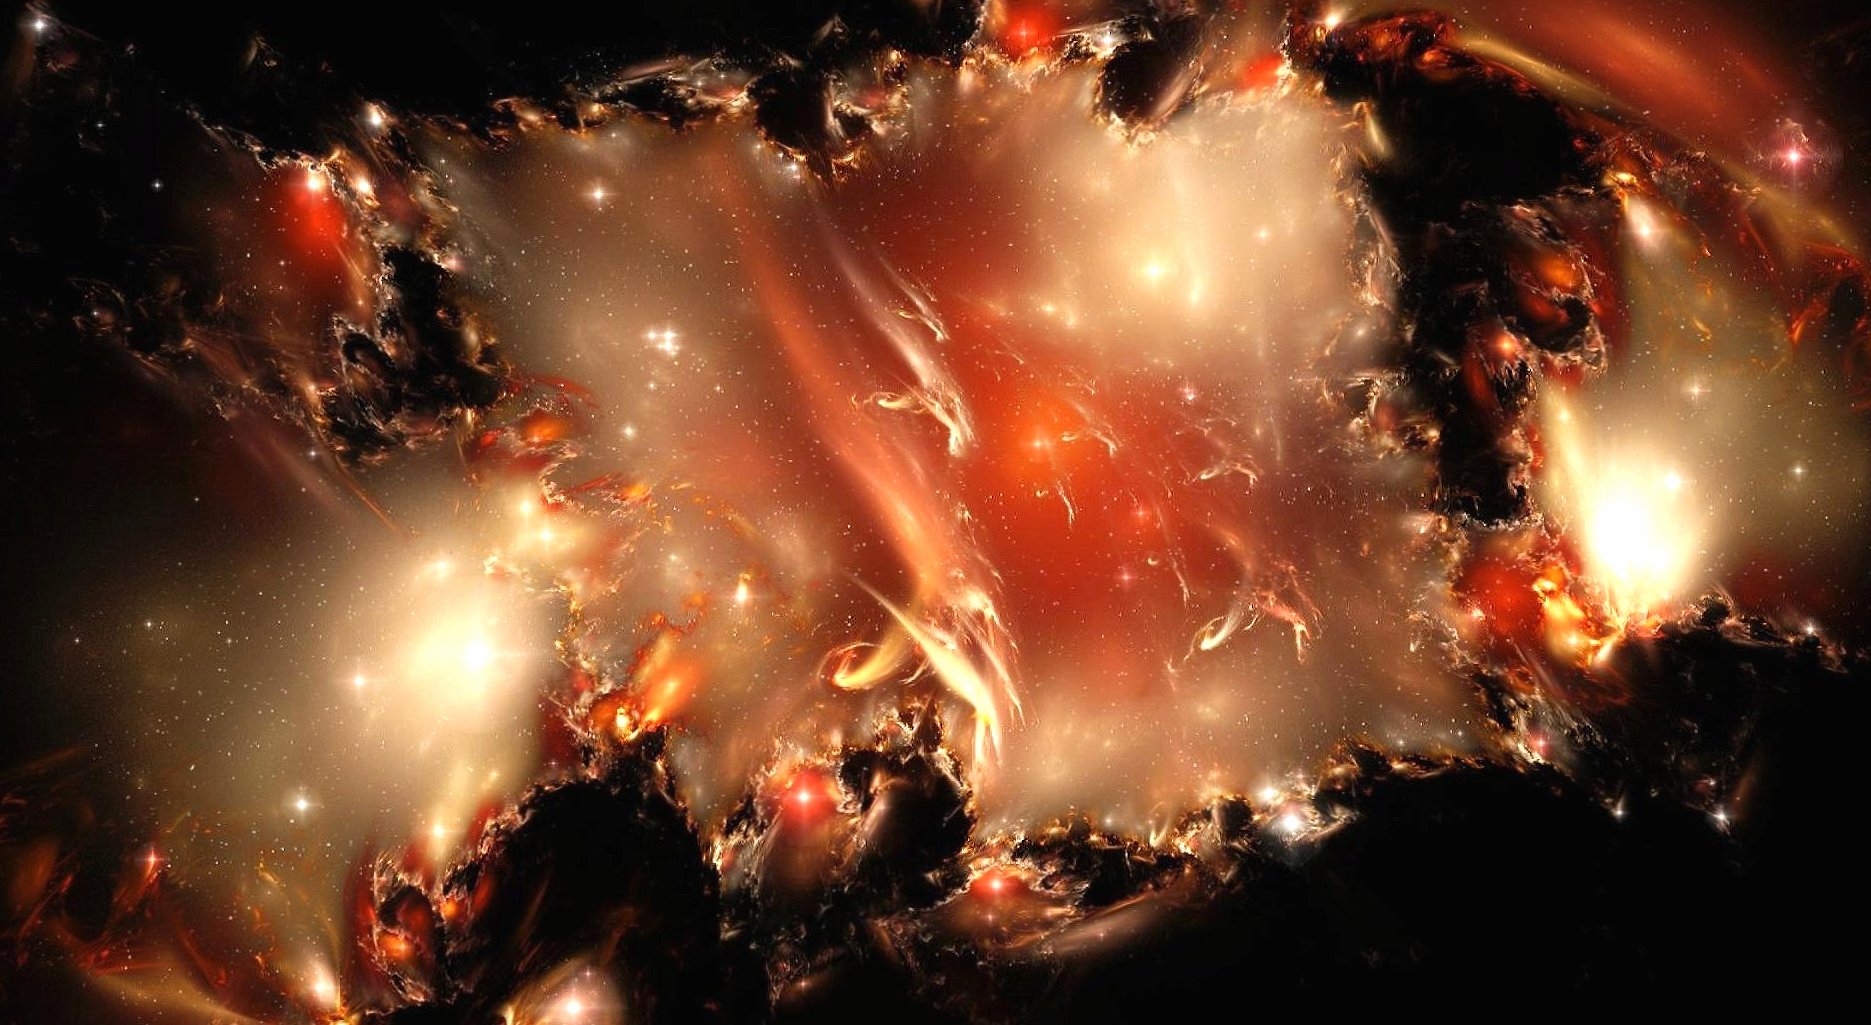 Hot nebula at 1600 x 1200 size wallpapers HD quality